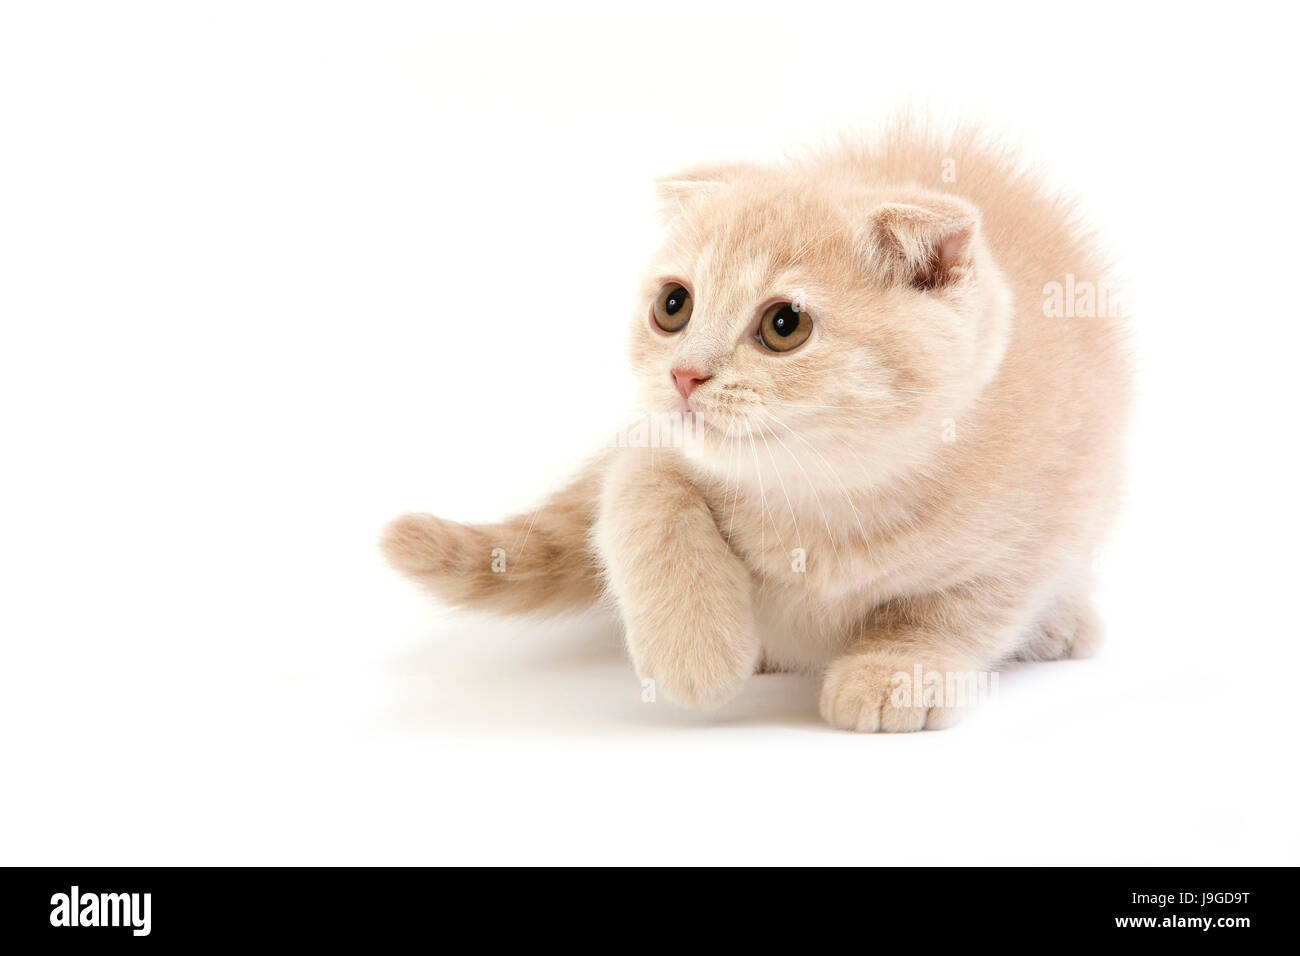 Cream Scottish Fold Domestic Cat, 2 months old Kitten standing against White Background, Stock Photo